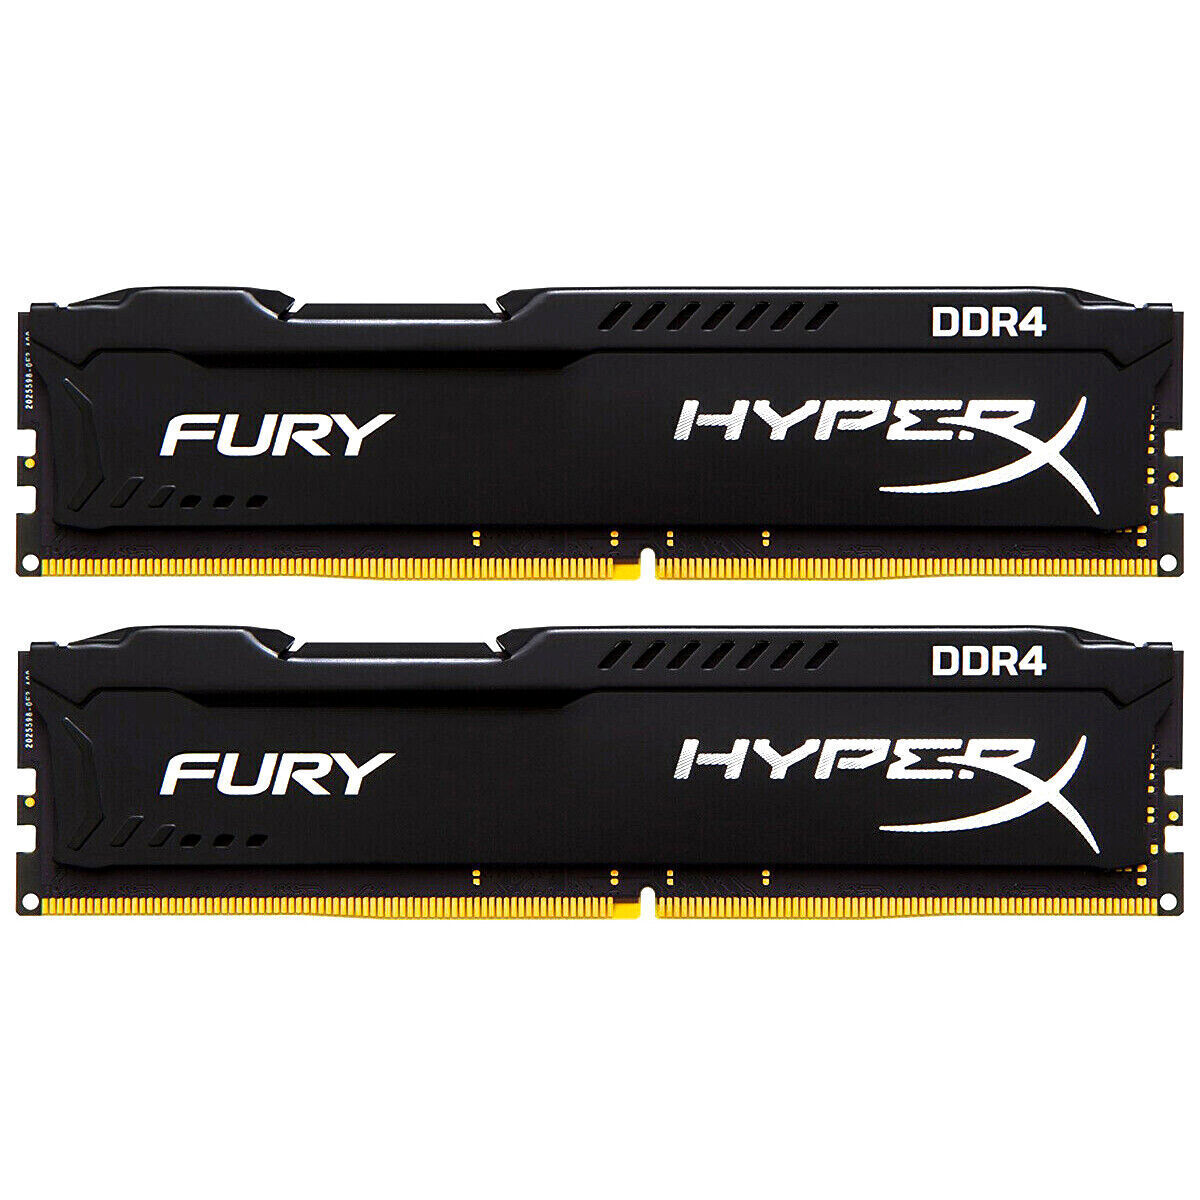 HyperX FURY DDR4 8GB 2666 MHz PC4-21300 Desktop RAM Memory DIMM 288PINS 2x 8GB